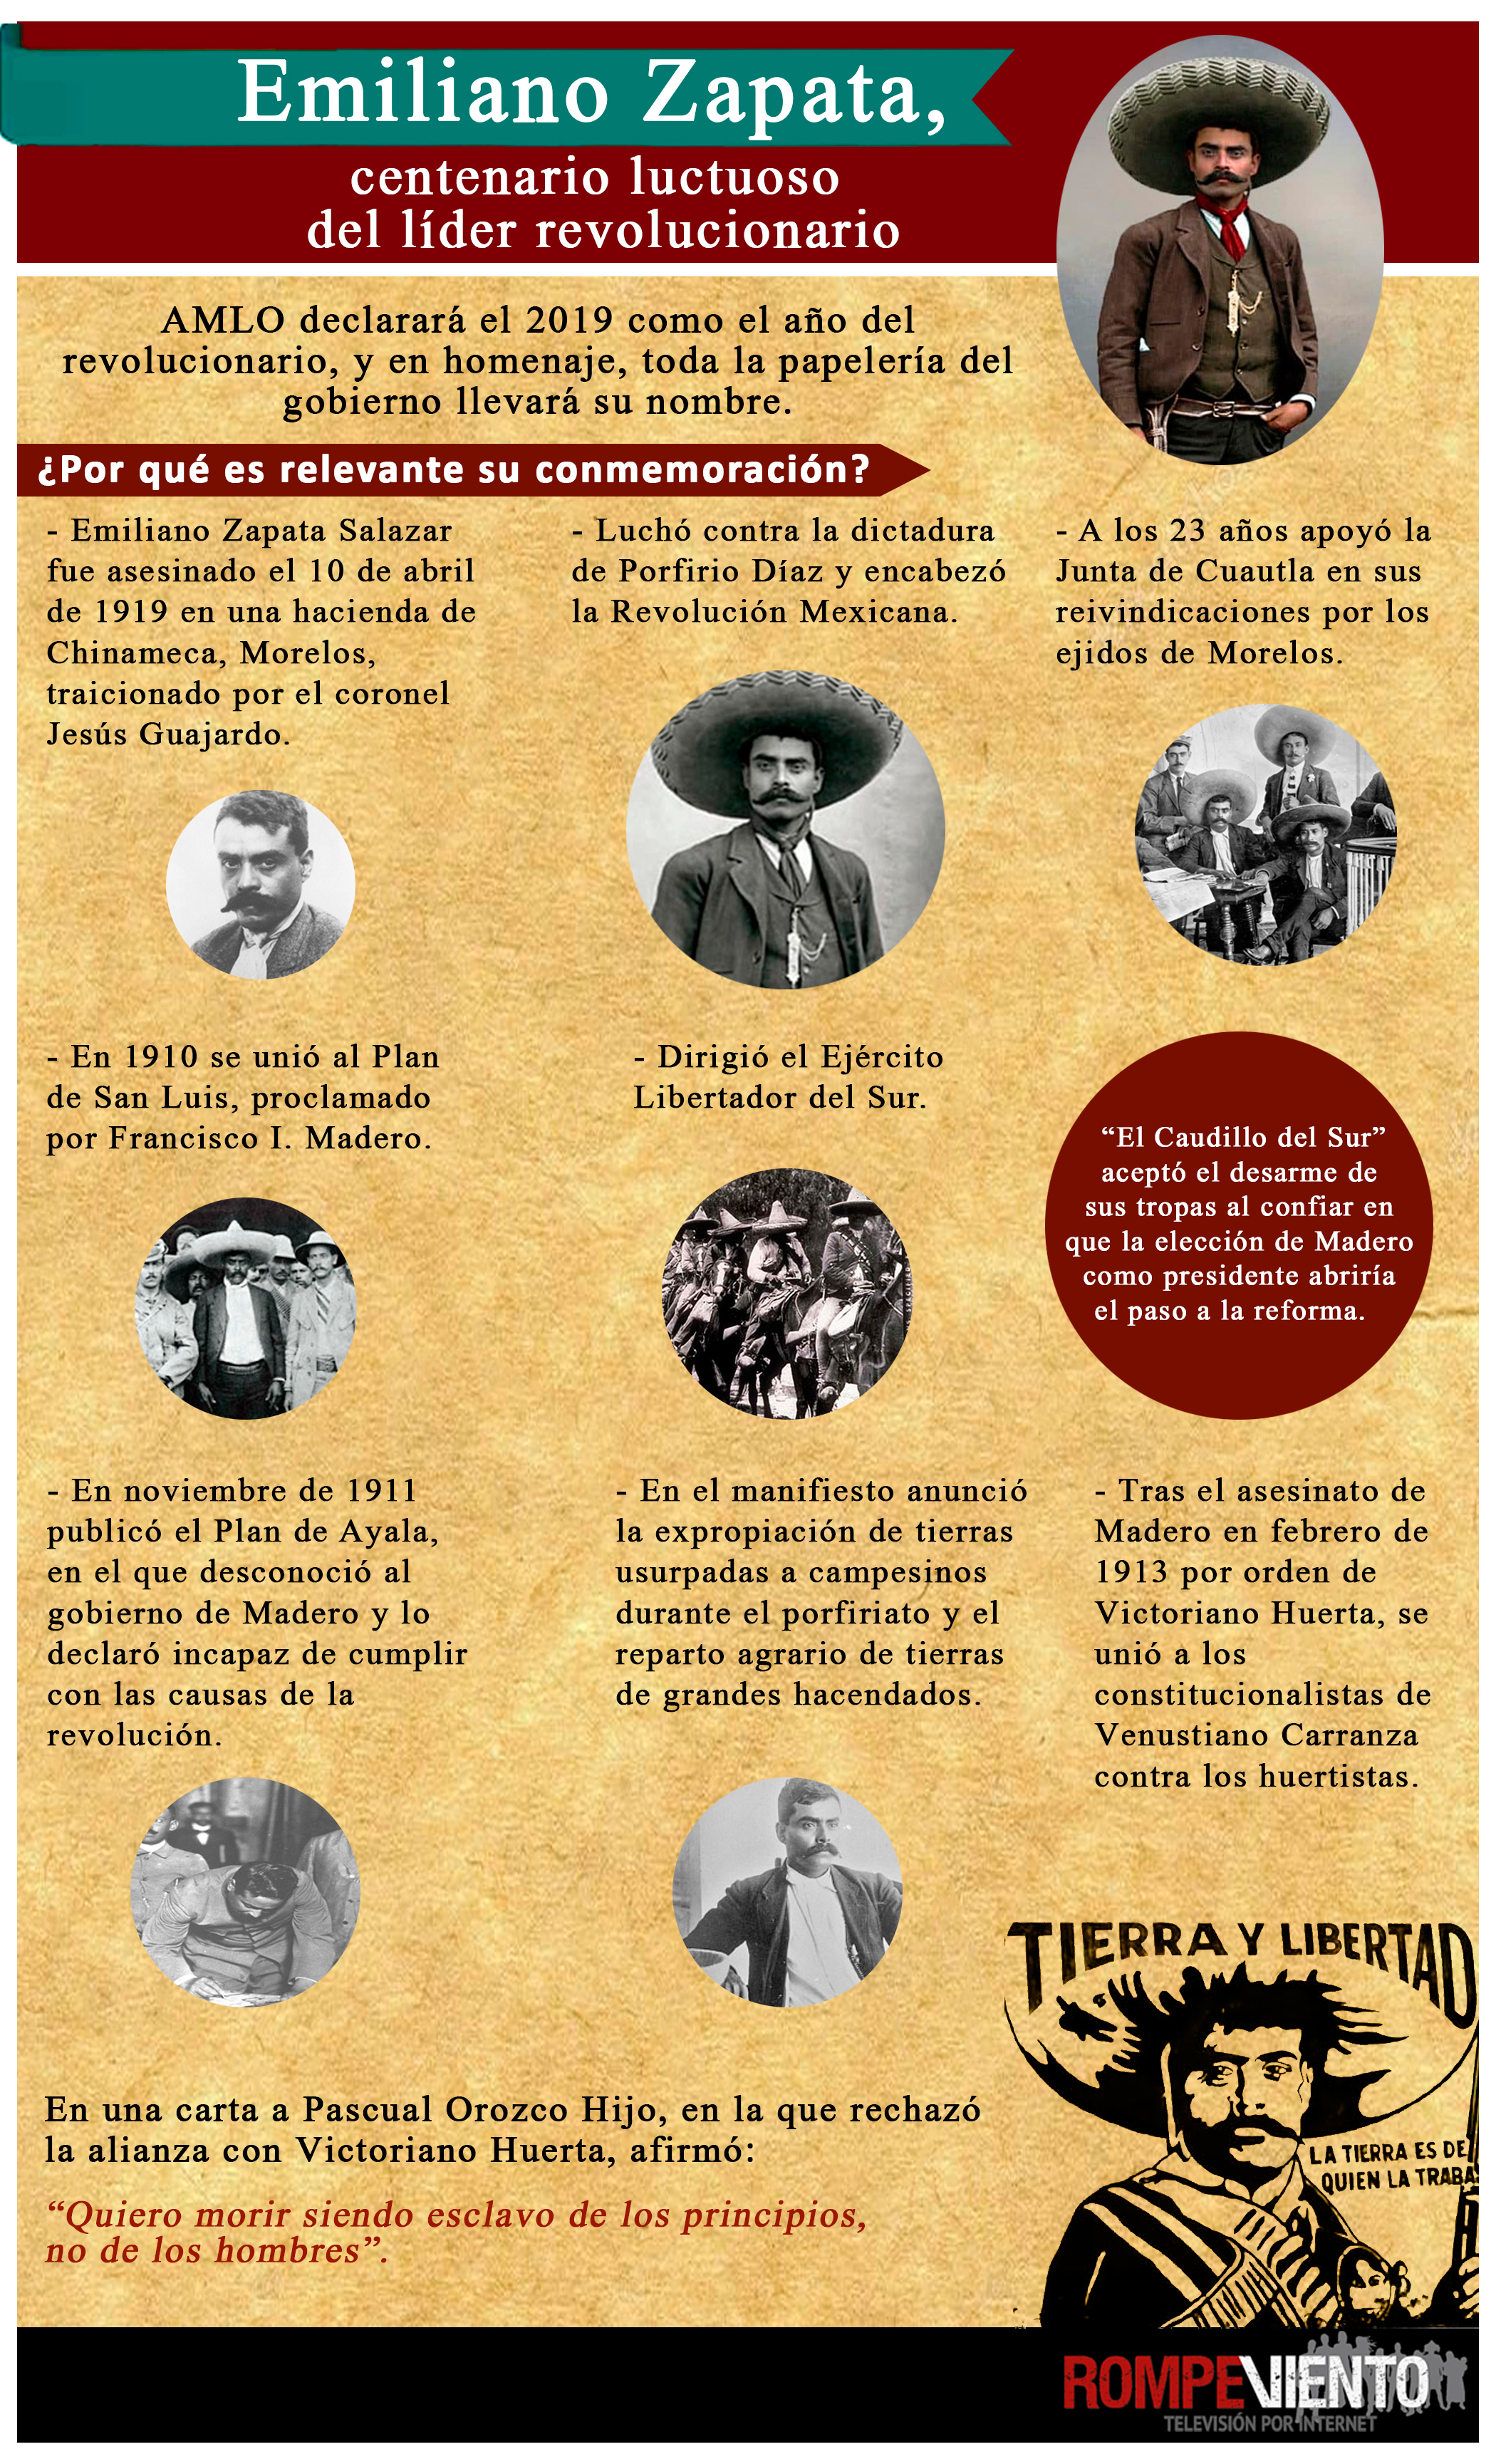 Emiliano Zapata, centenario luctuoso del líder revolucionario - Infografía